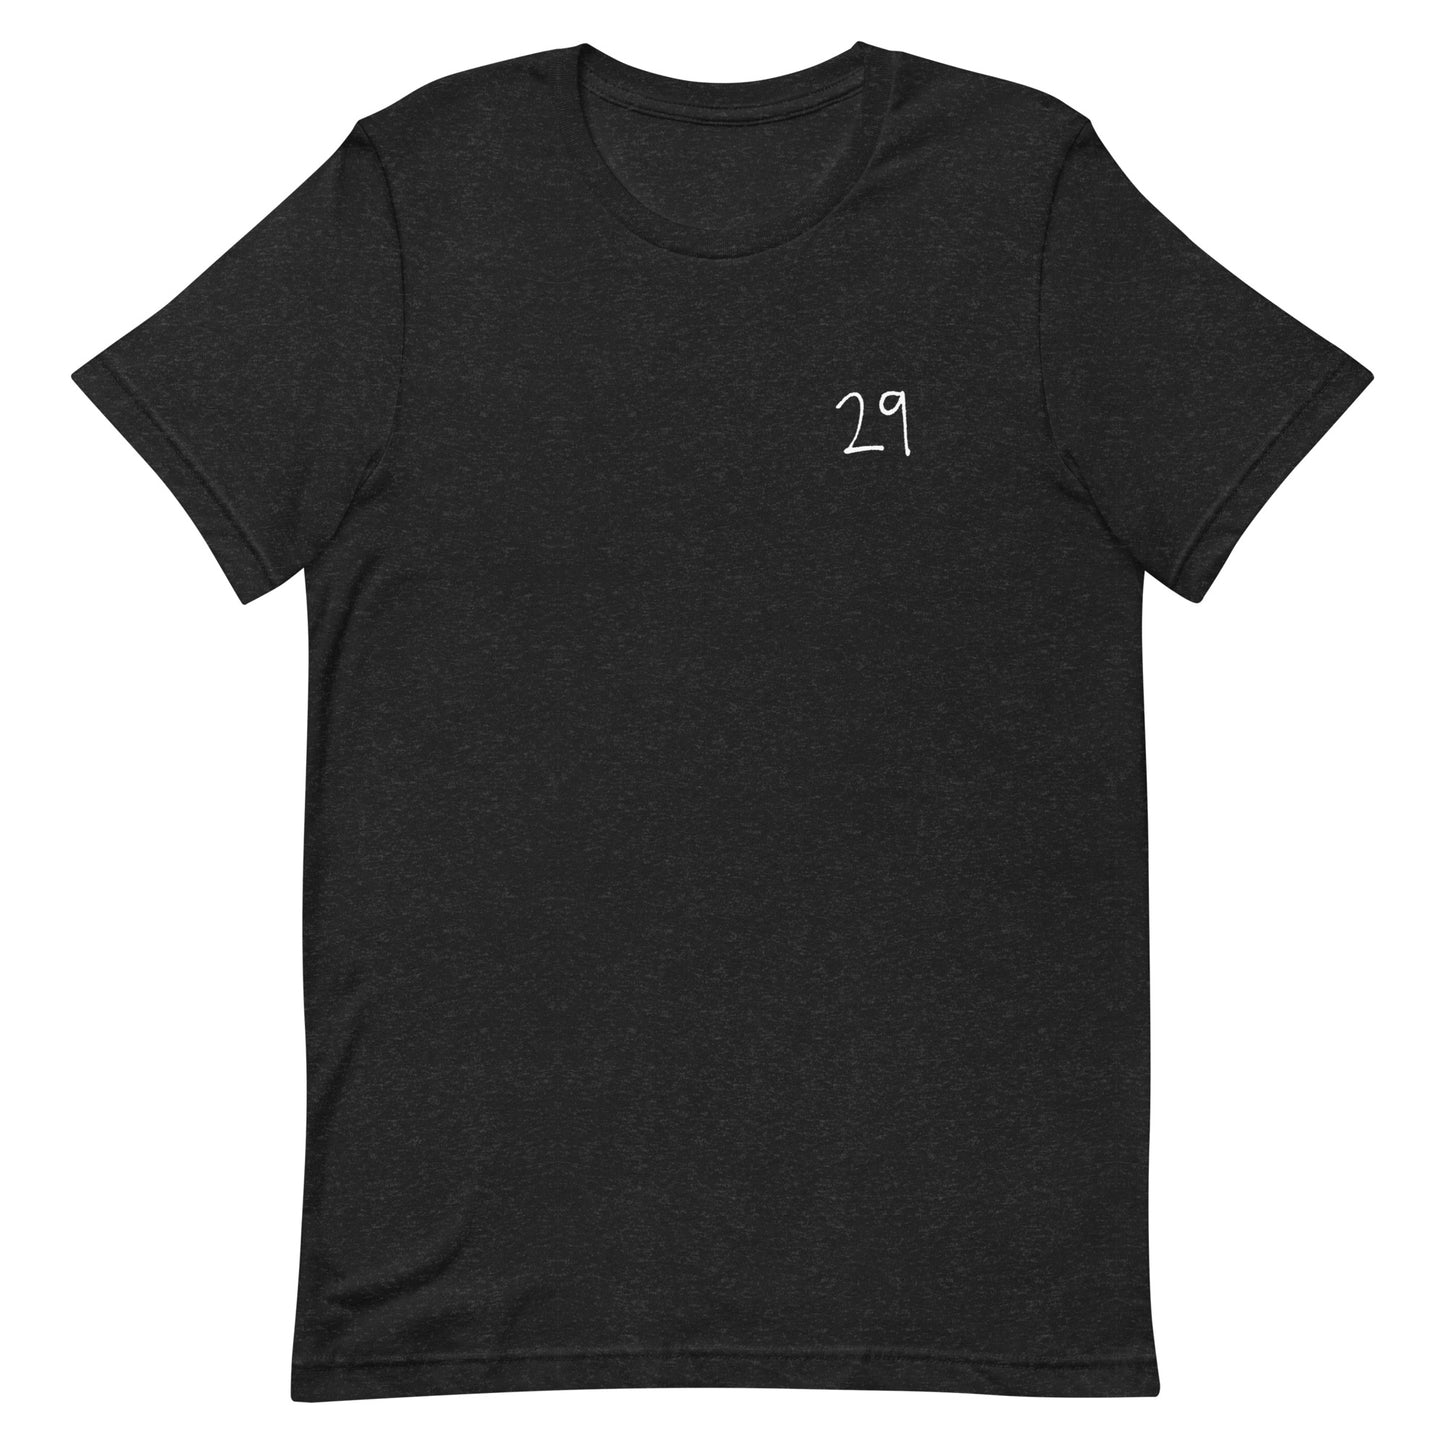 29 Small Logo T-Shirt